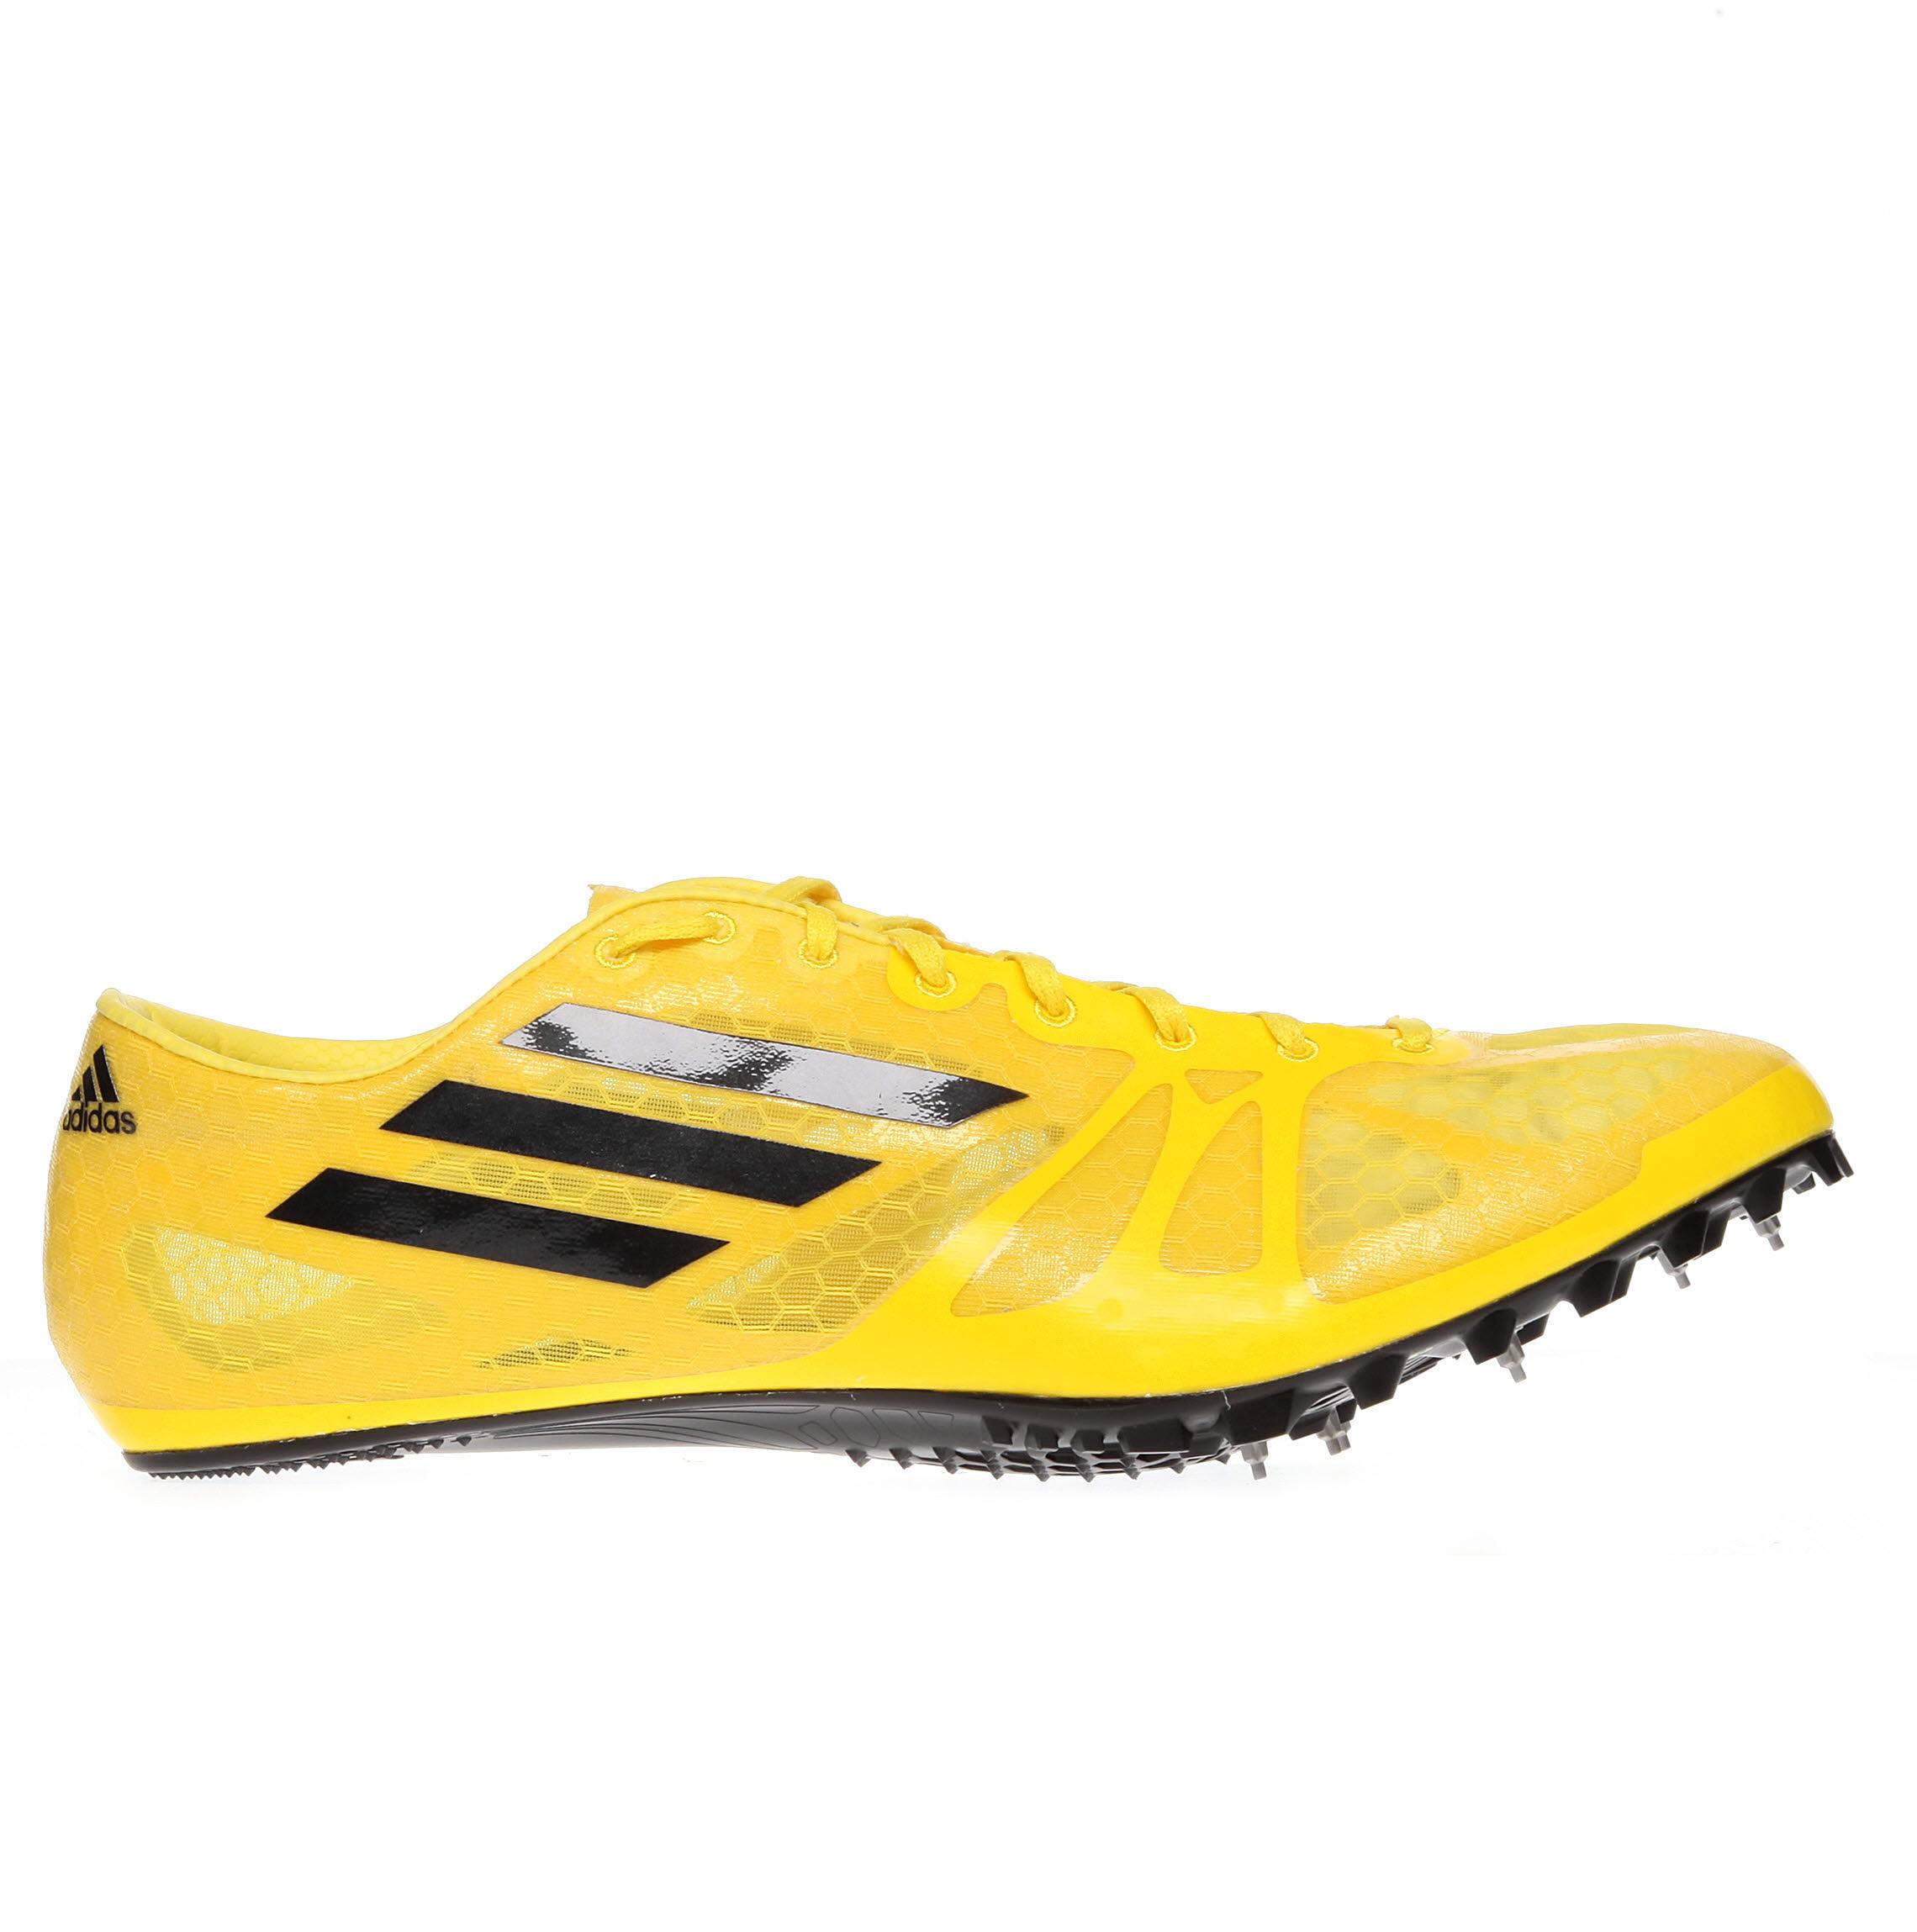 Foto Zapatillas Adidas - Adizero Prime SP - UK 9 Yellow/Black/Black